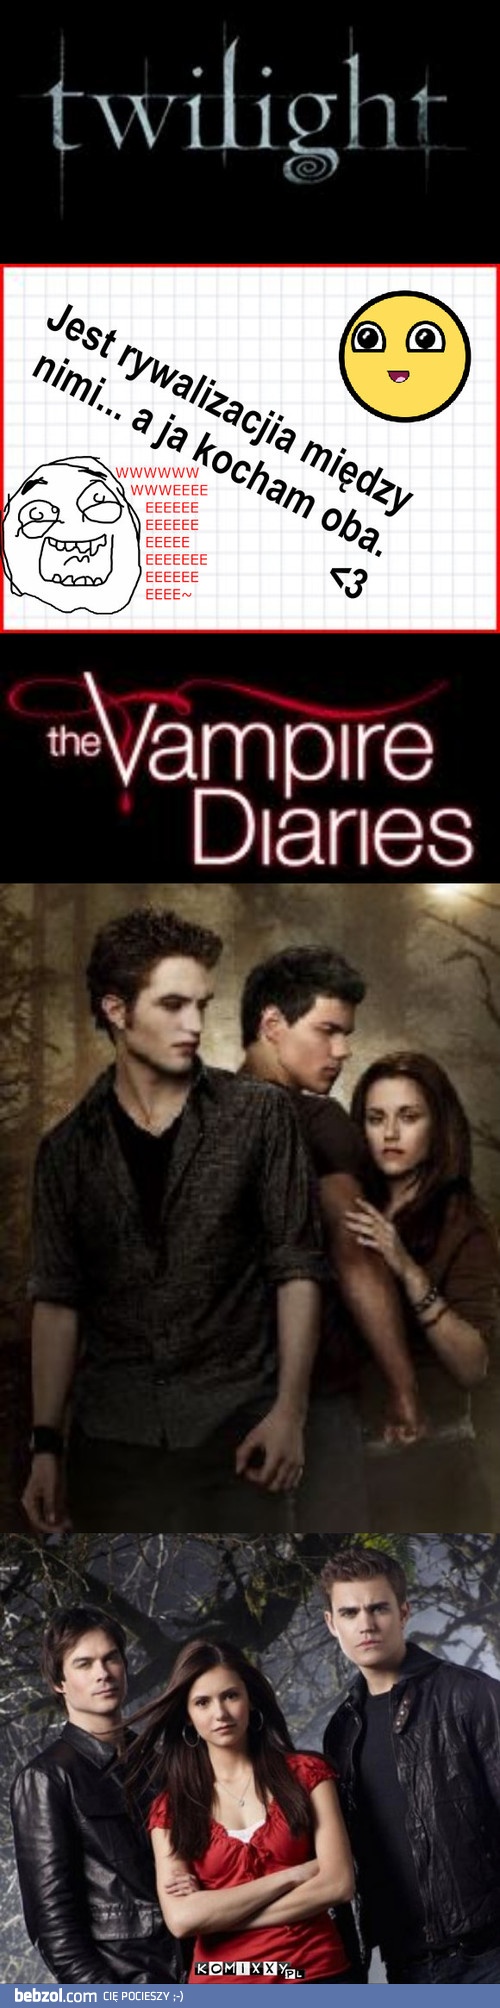 The Vampires 